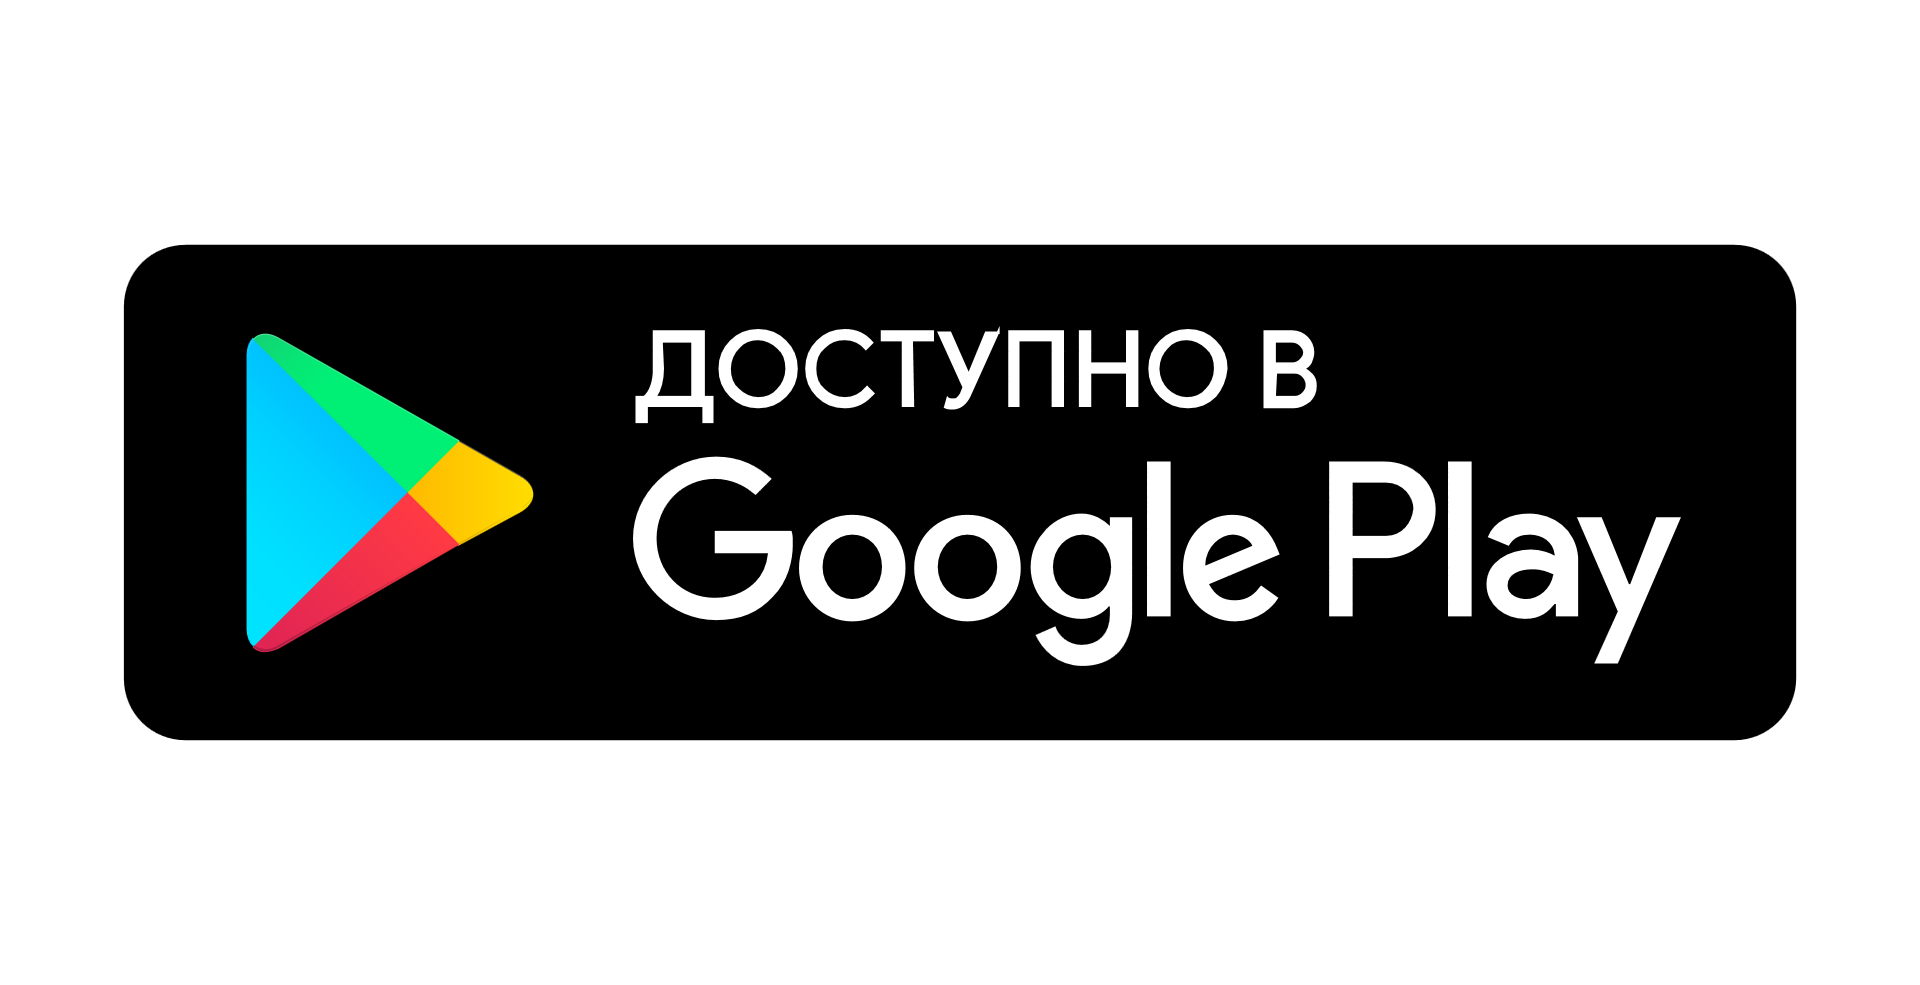 Гугл плей. Логотип Google Play. Доступно в гугл плей. Доступно в гугл плей иконка. Google play ota